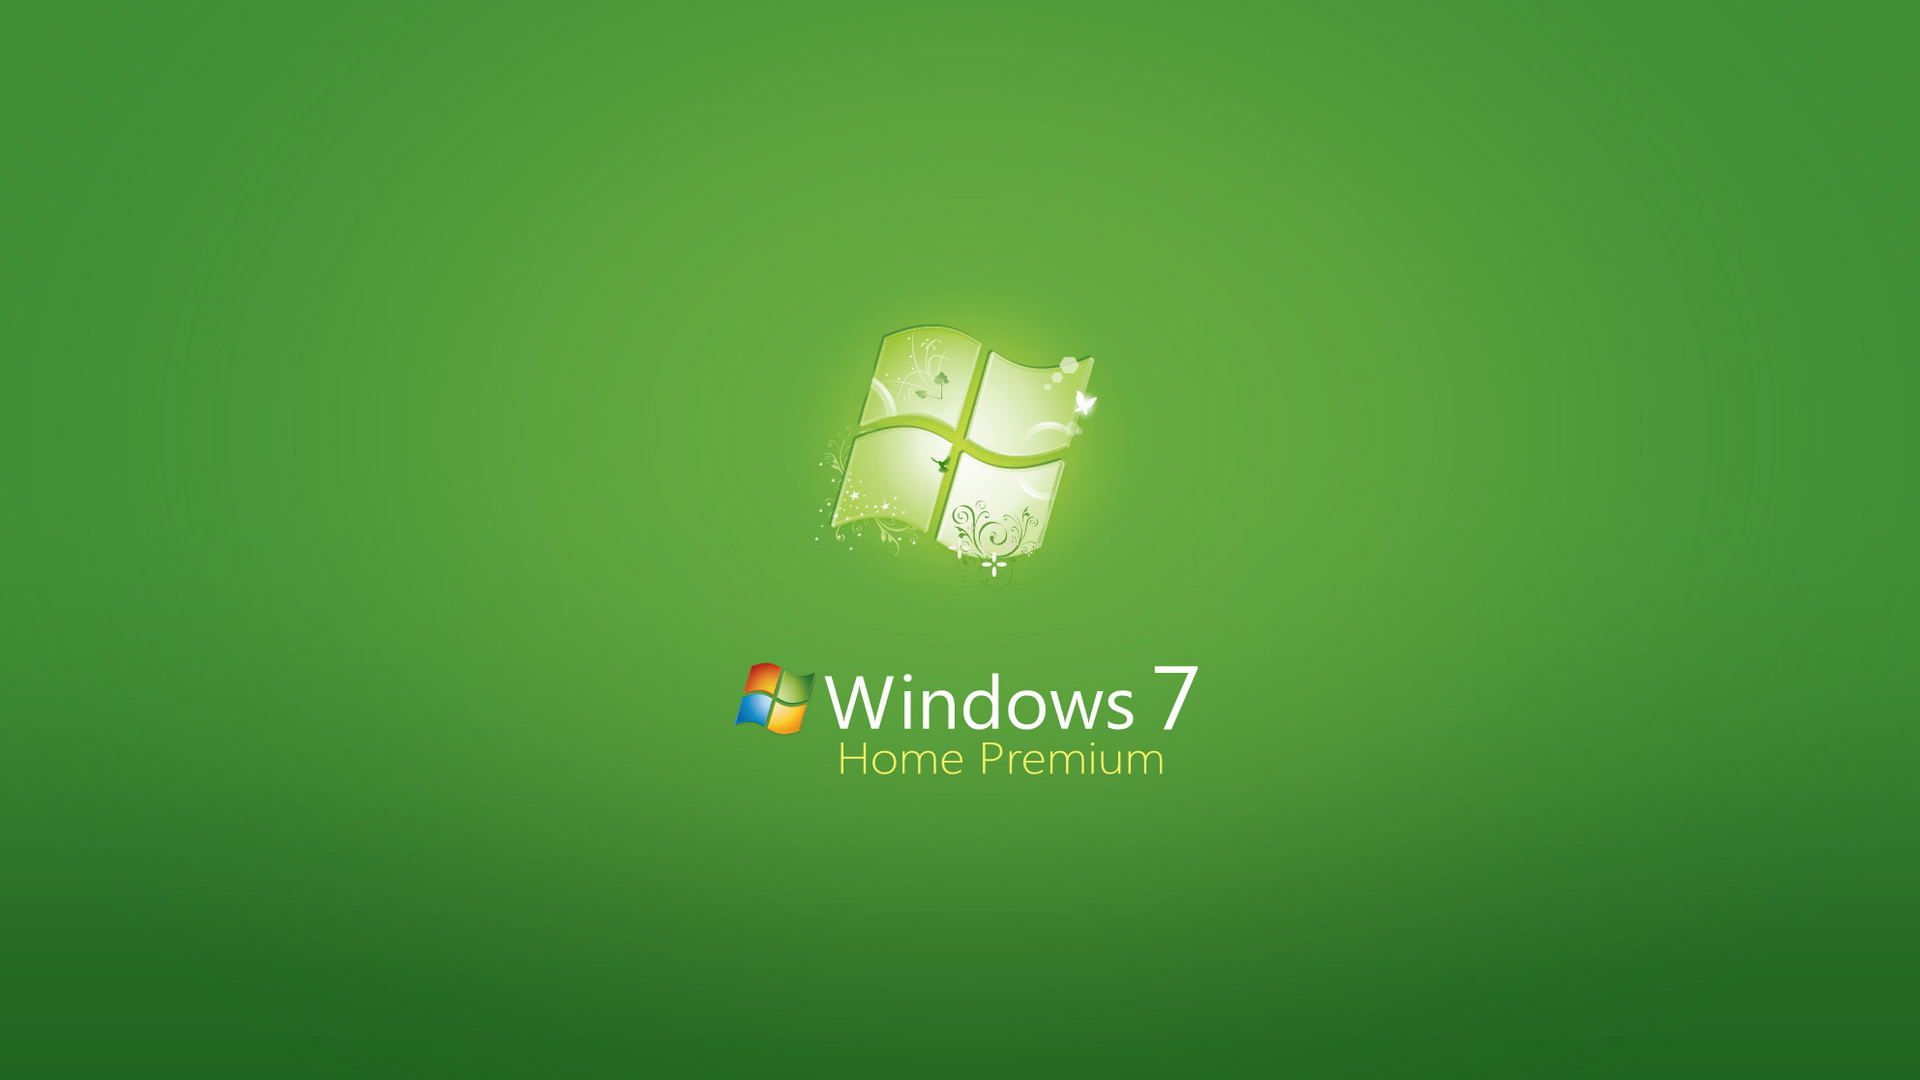 logos, brands, windows, background, green